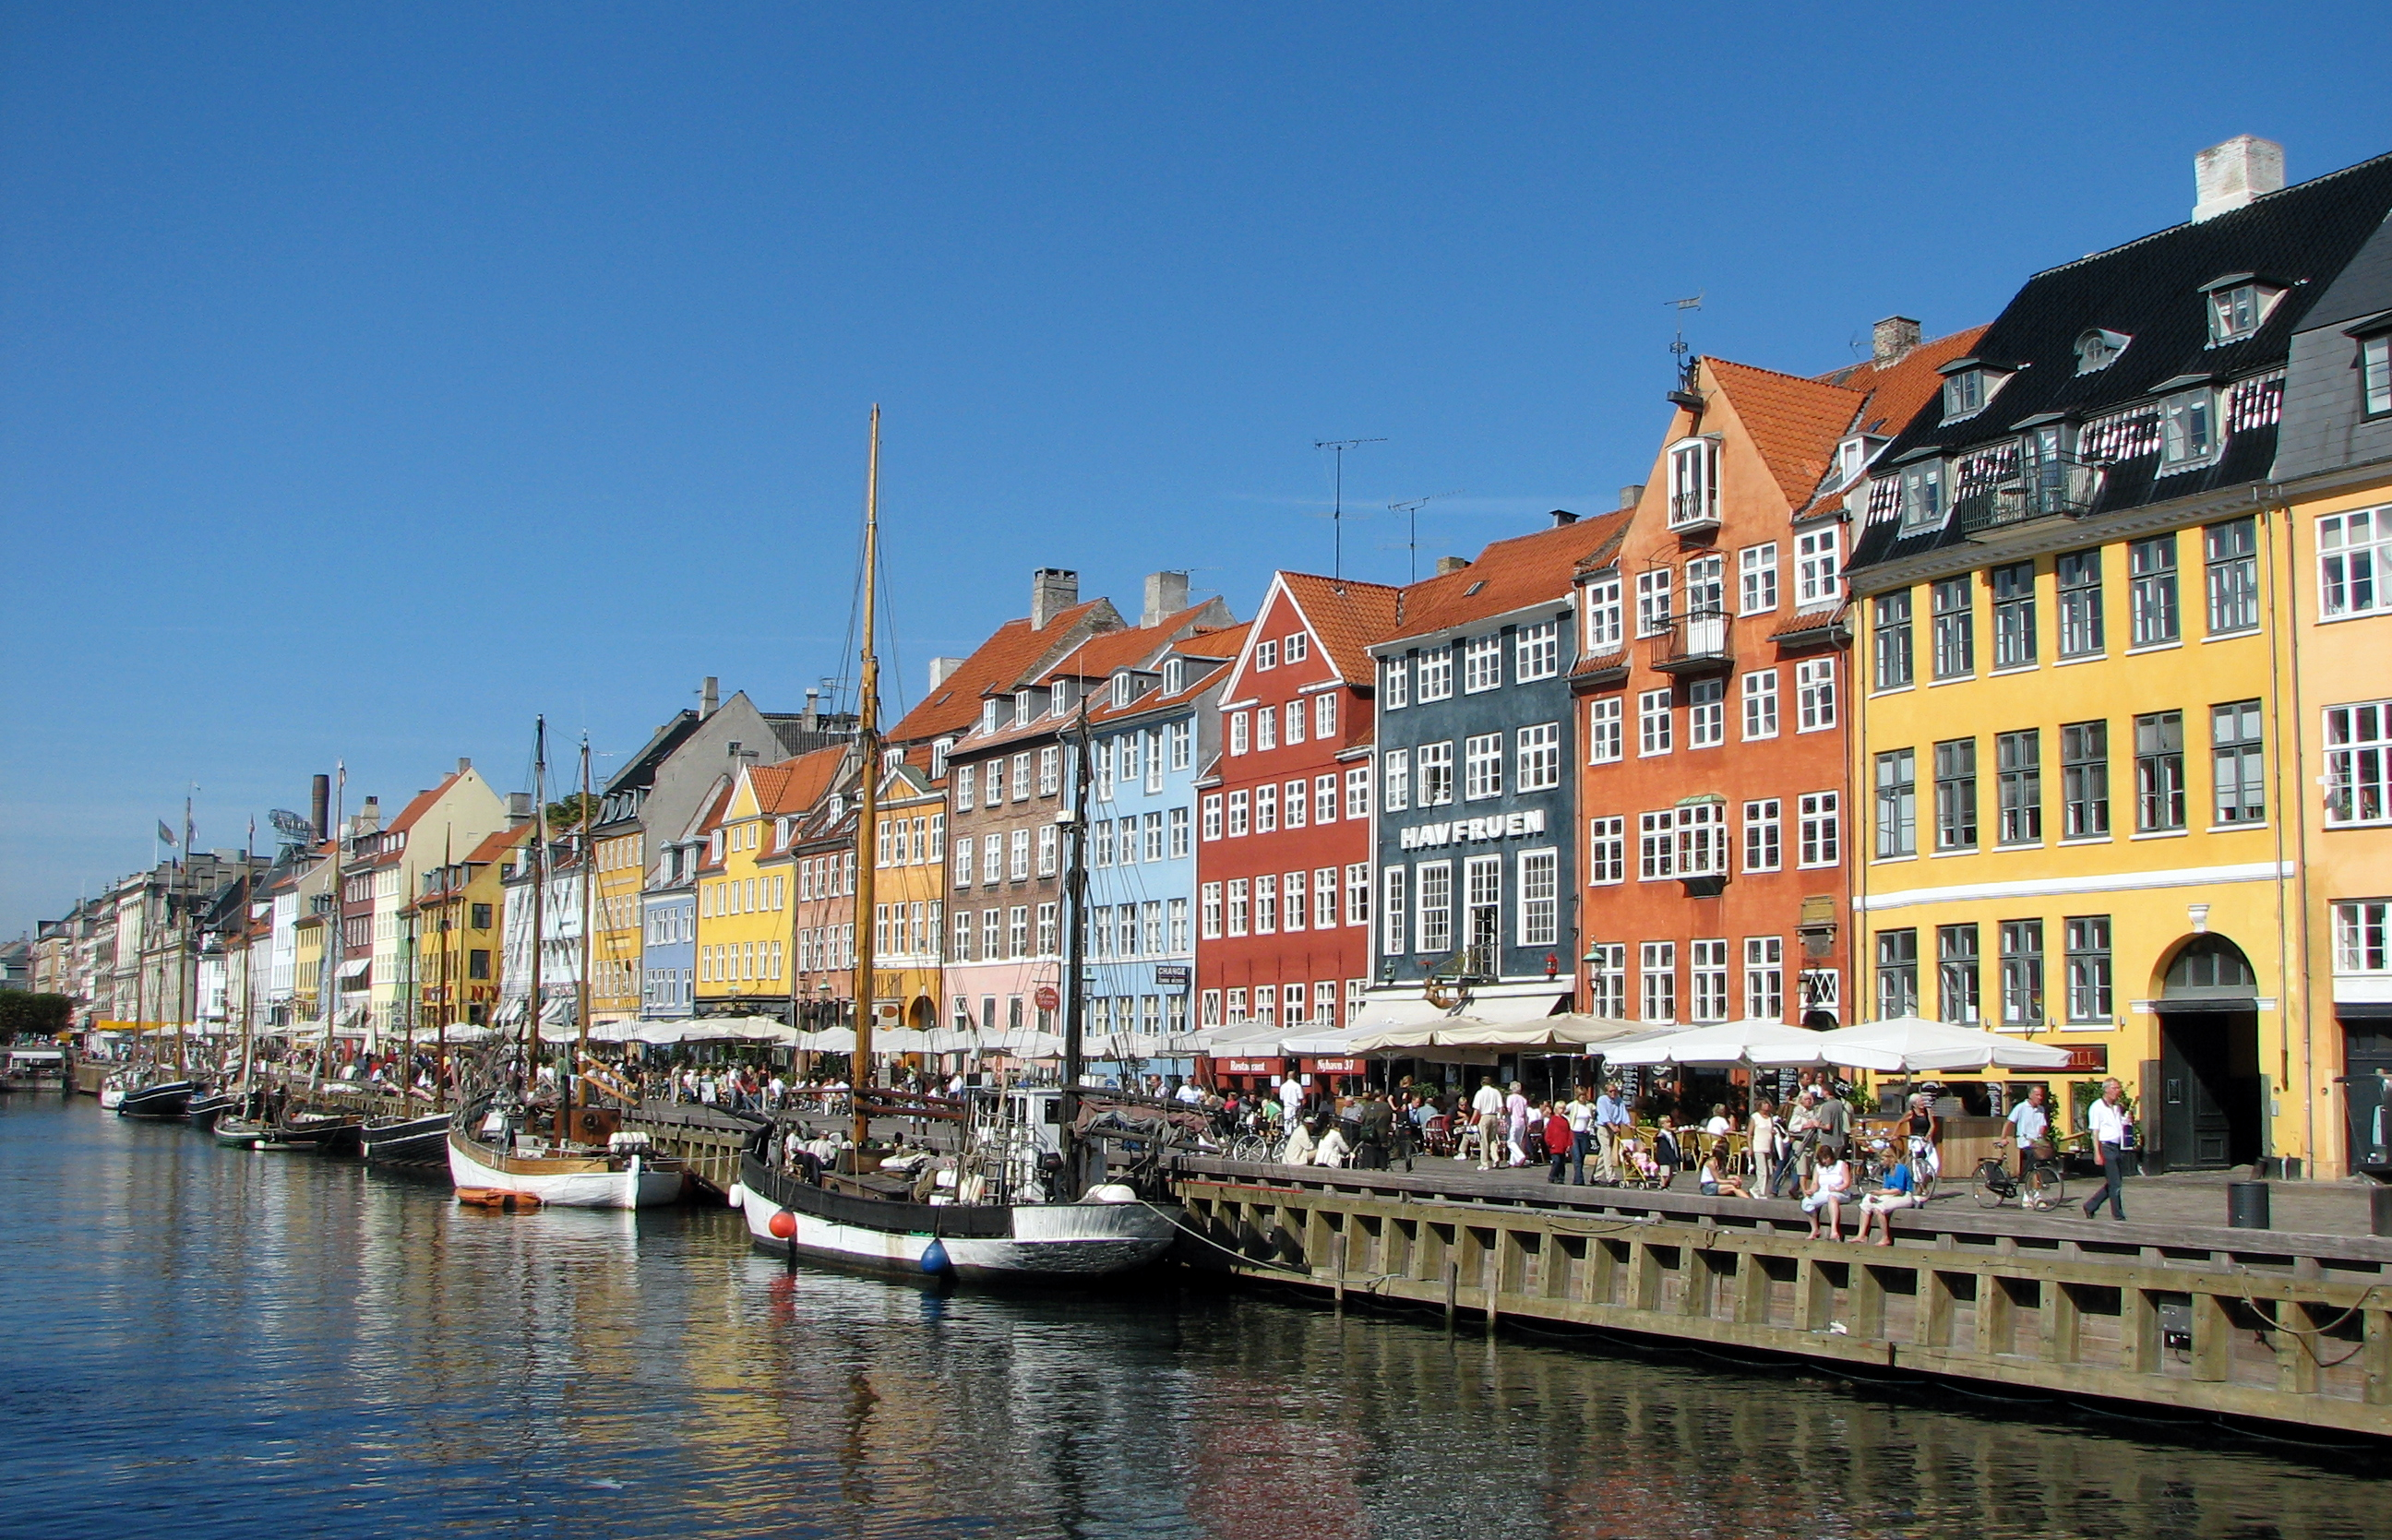 File:Nyhavn, Copenhagen.jpg - Wikimedia Commons